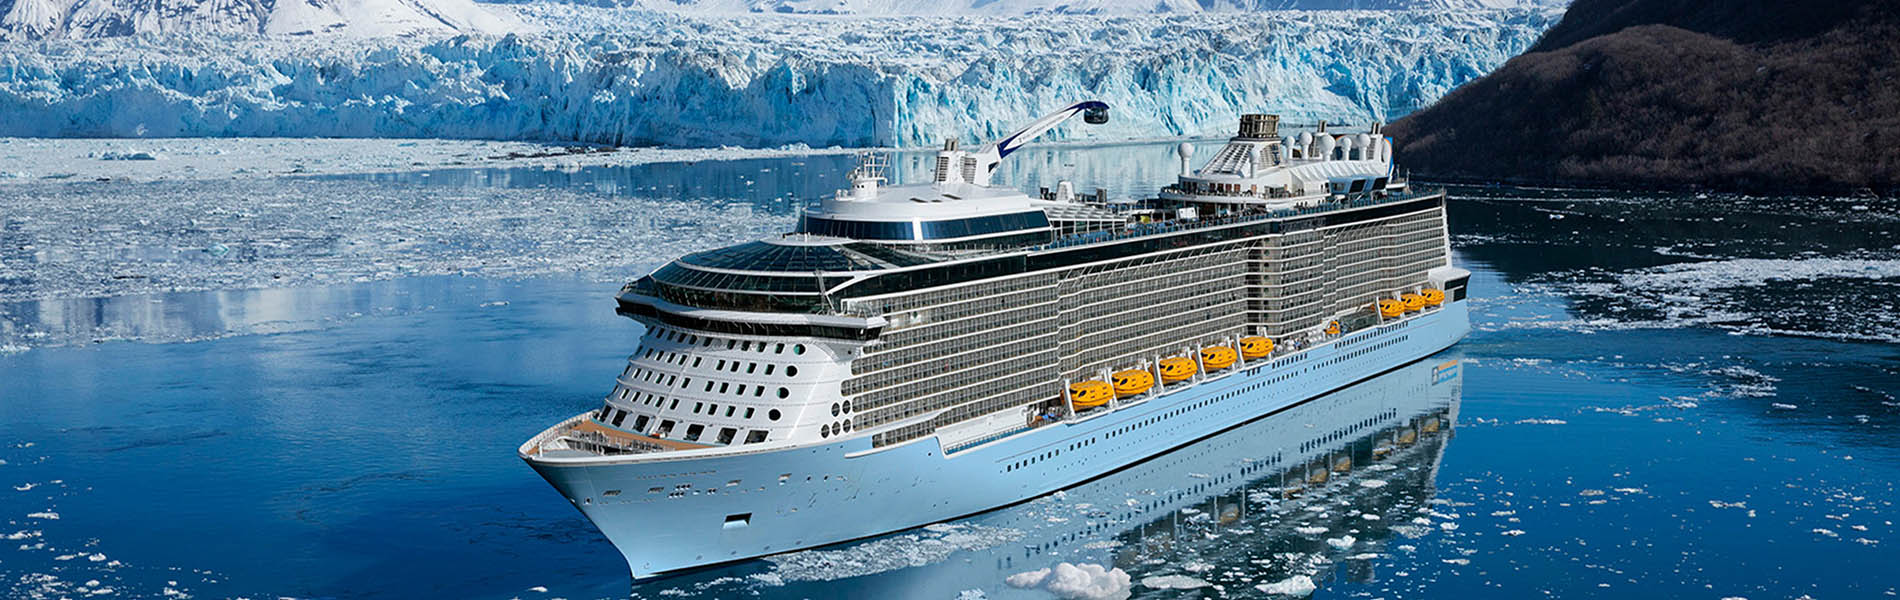 alaska-cruise-royal-carribean cruise